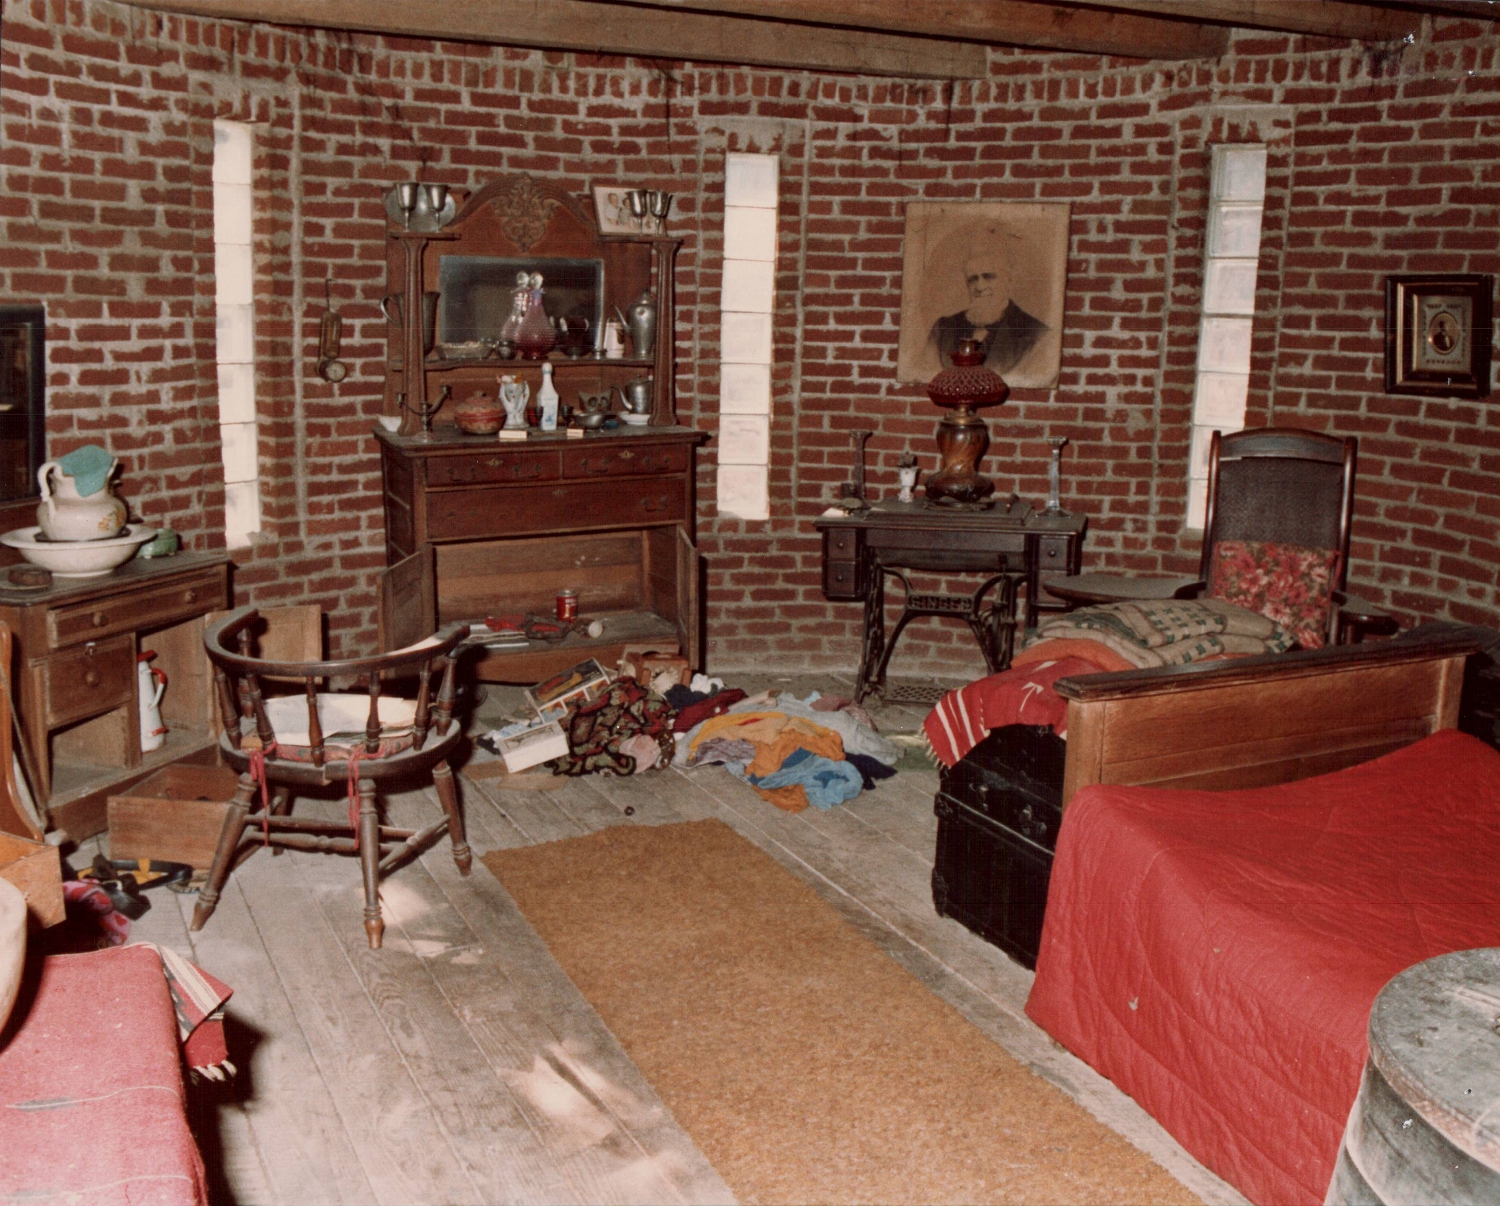 Scudder's ransacked bedroom